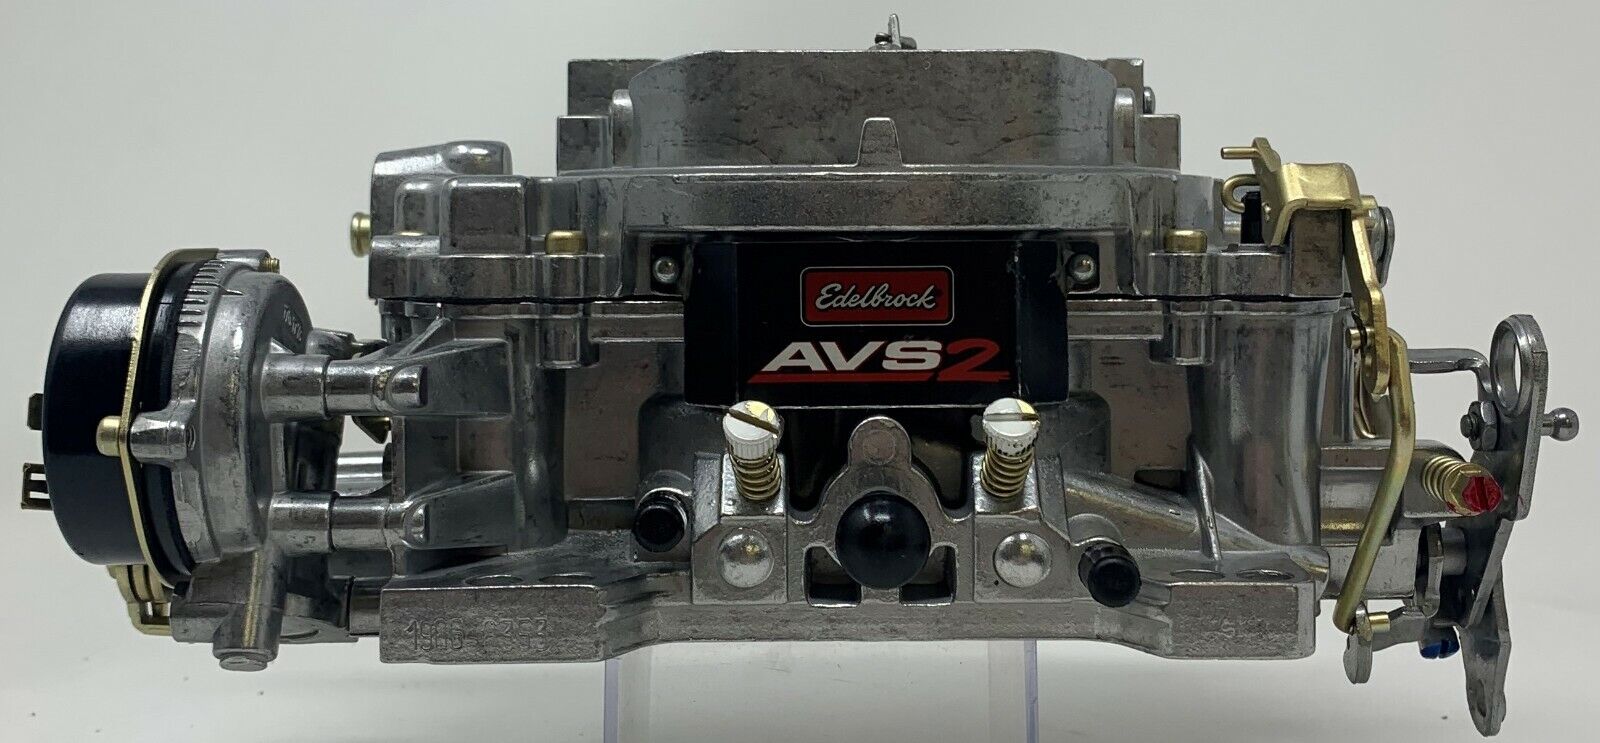 Edelbrock Remanufactured AVS2 Carburetor 650 CFM Electric Choke #1906  